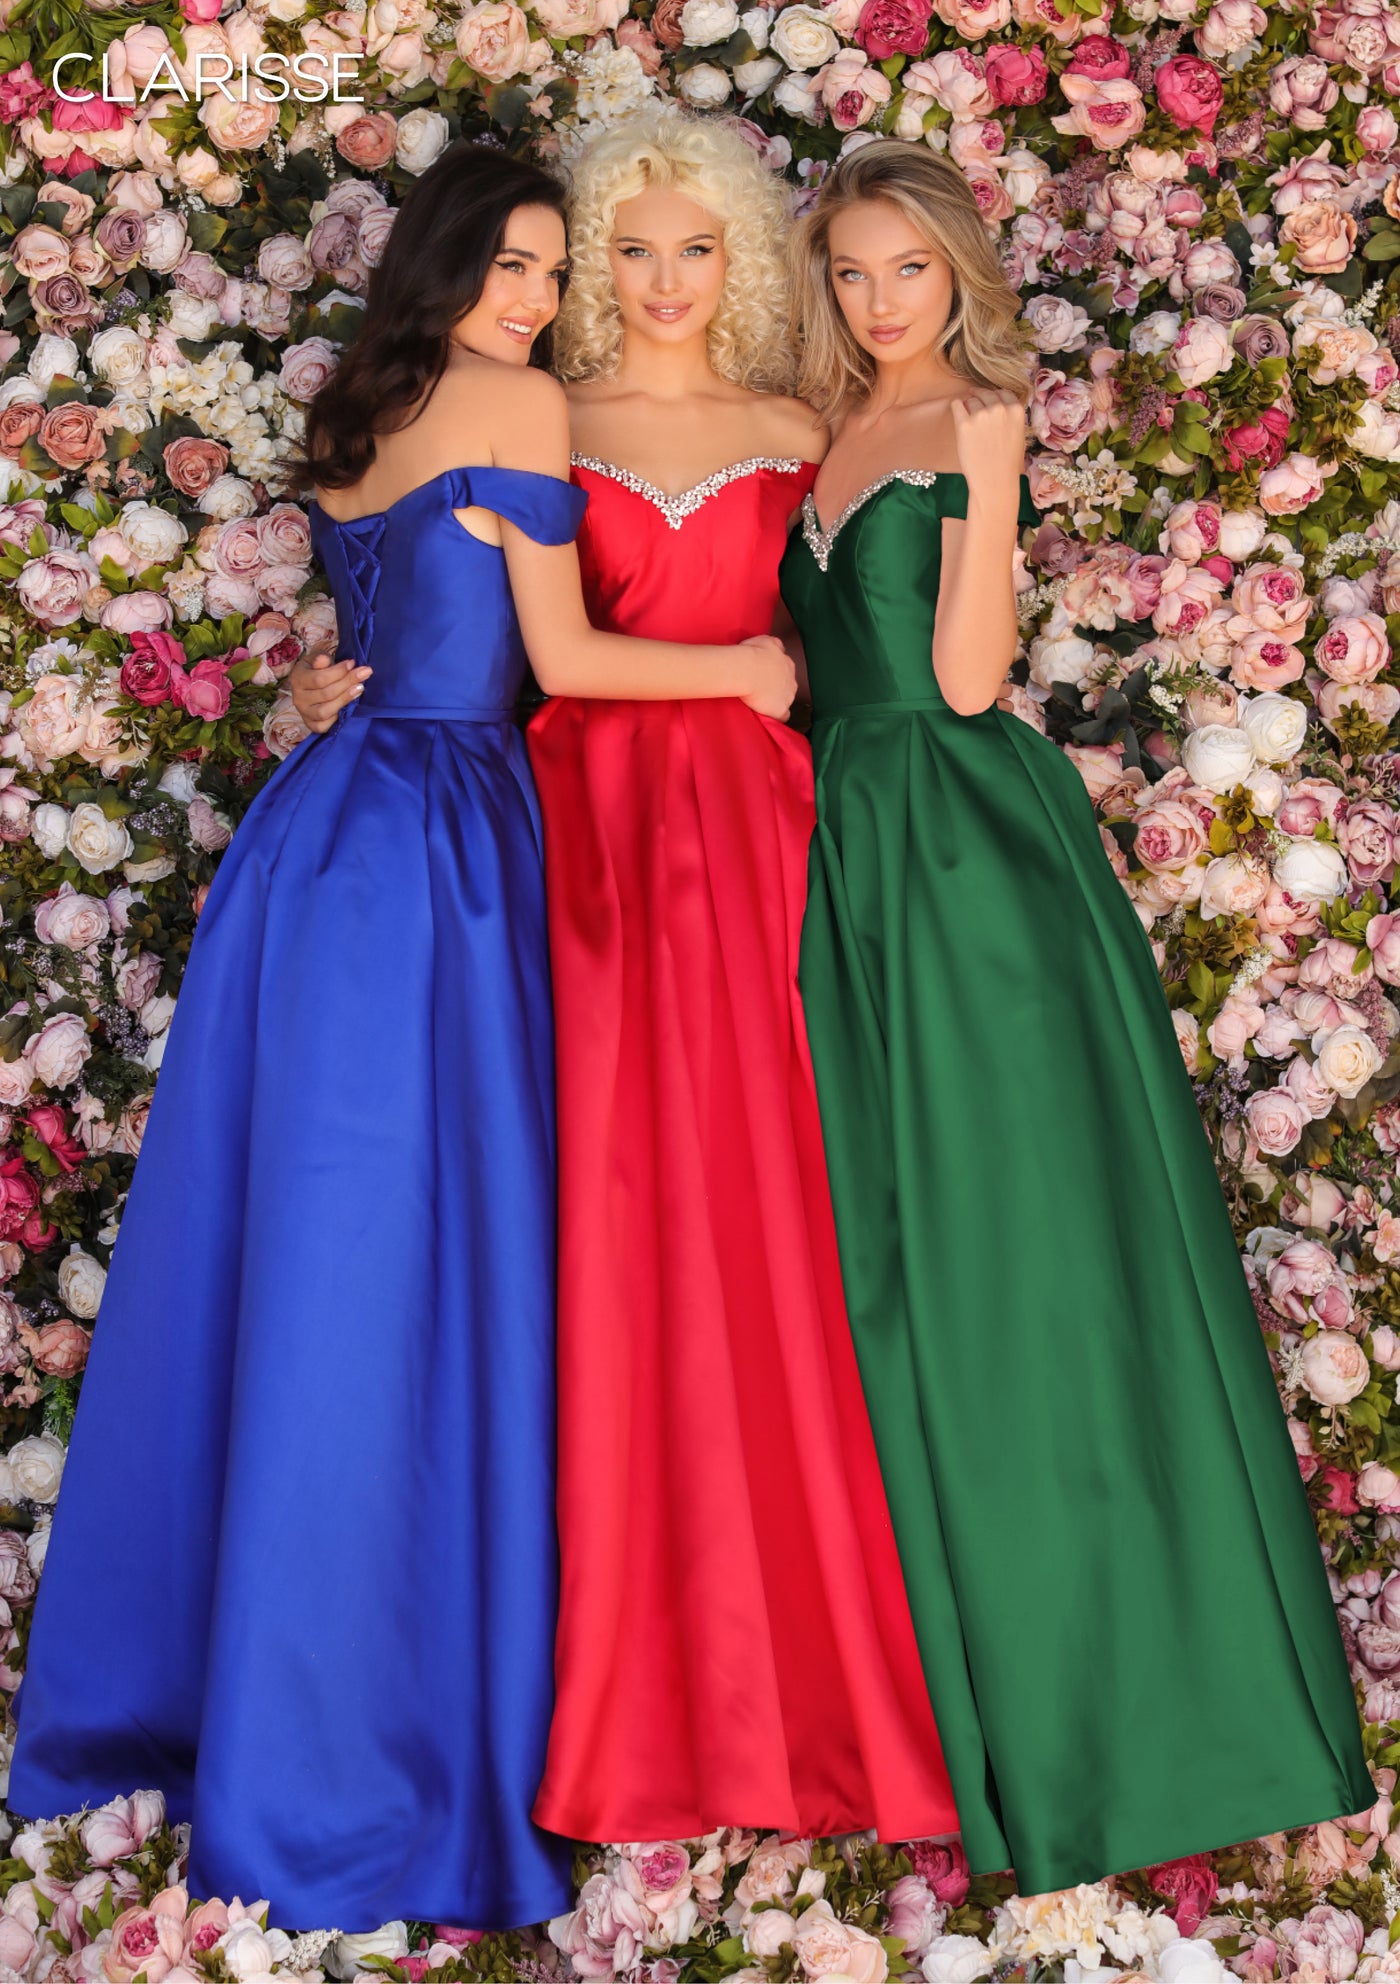 Clarisse 8057 Royal Blue Prom Dress